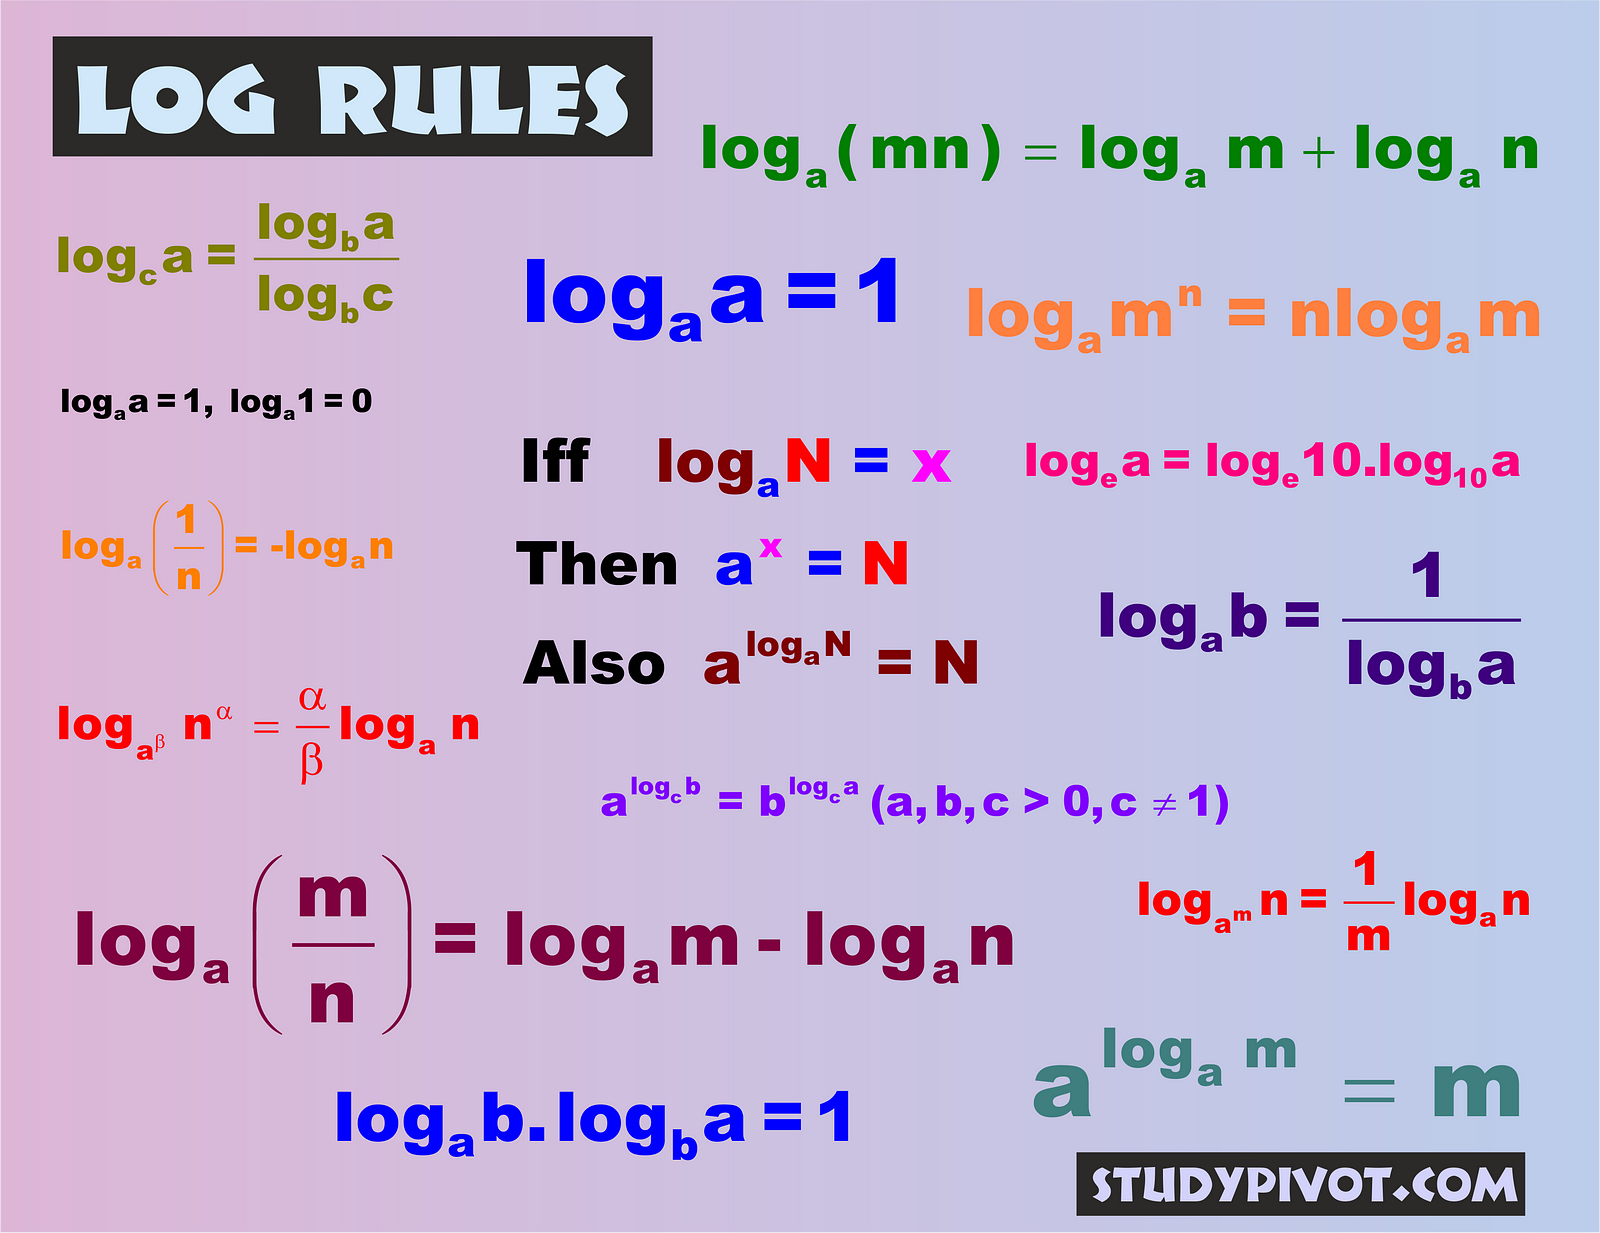 logarithm-rules-study-pivot-2-medium